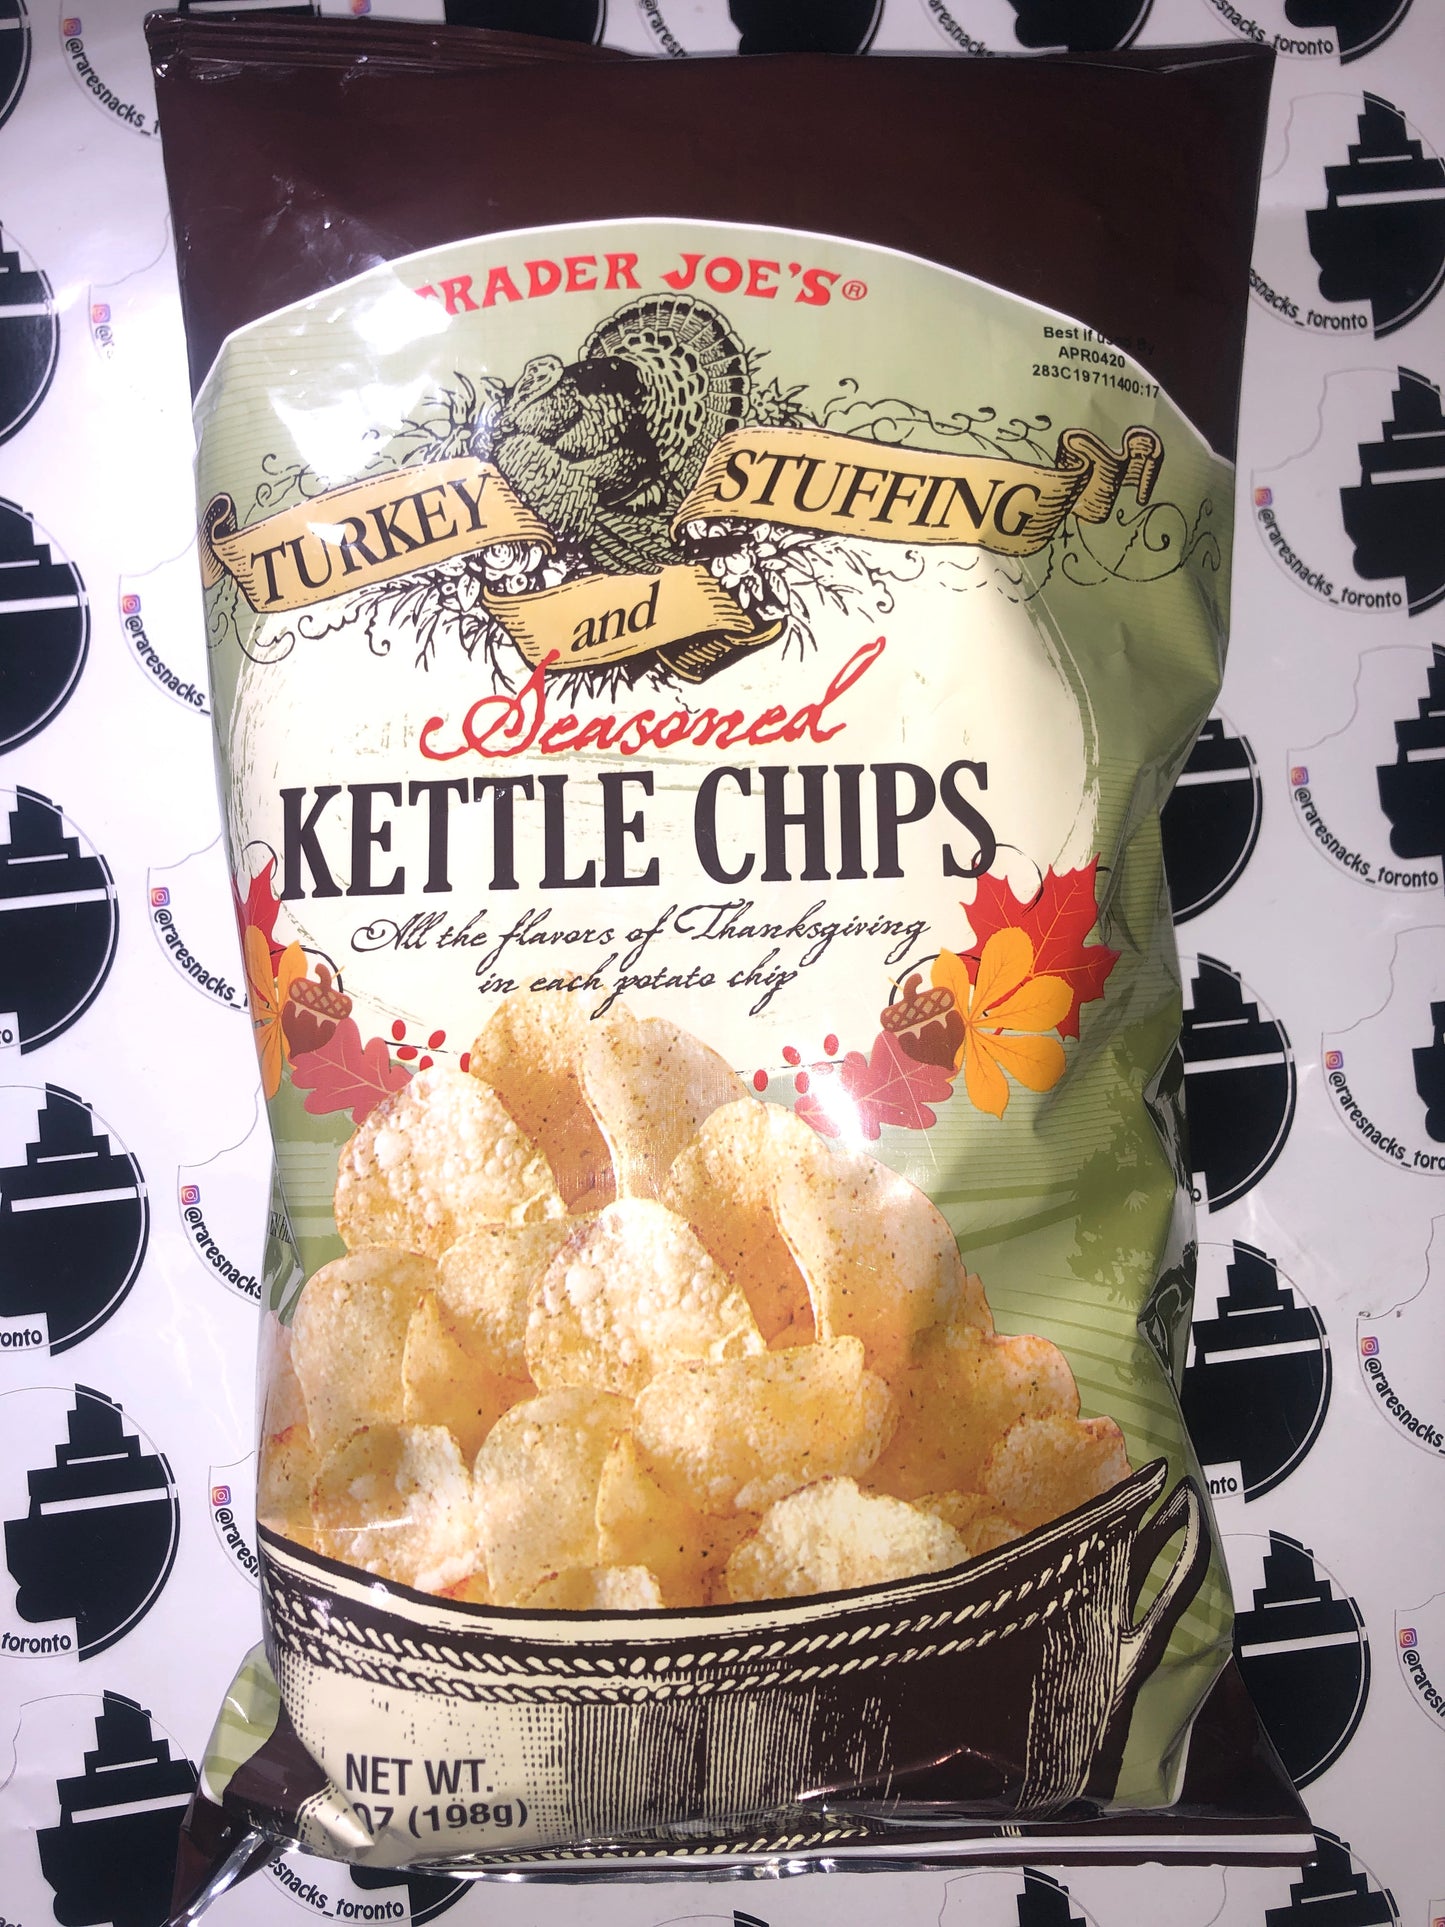 Trader Joe’s Turkey Stuffing and Seasoned Kettle Chips